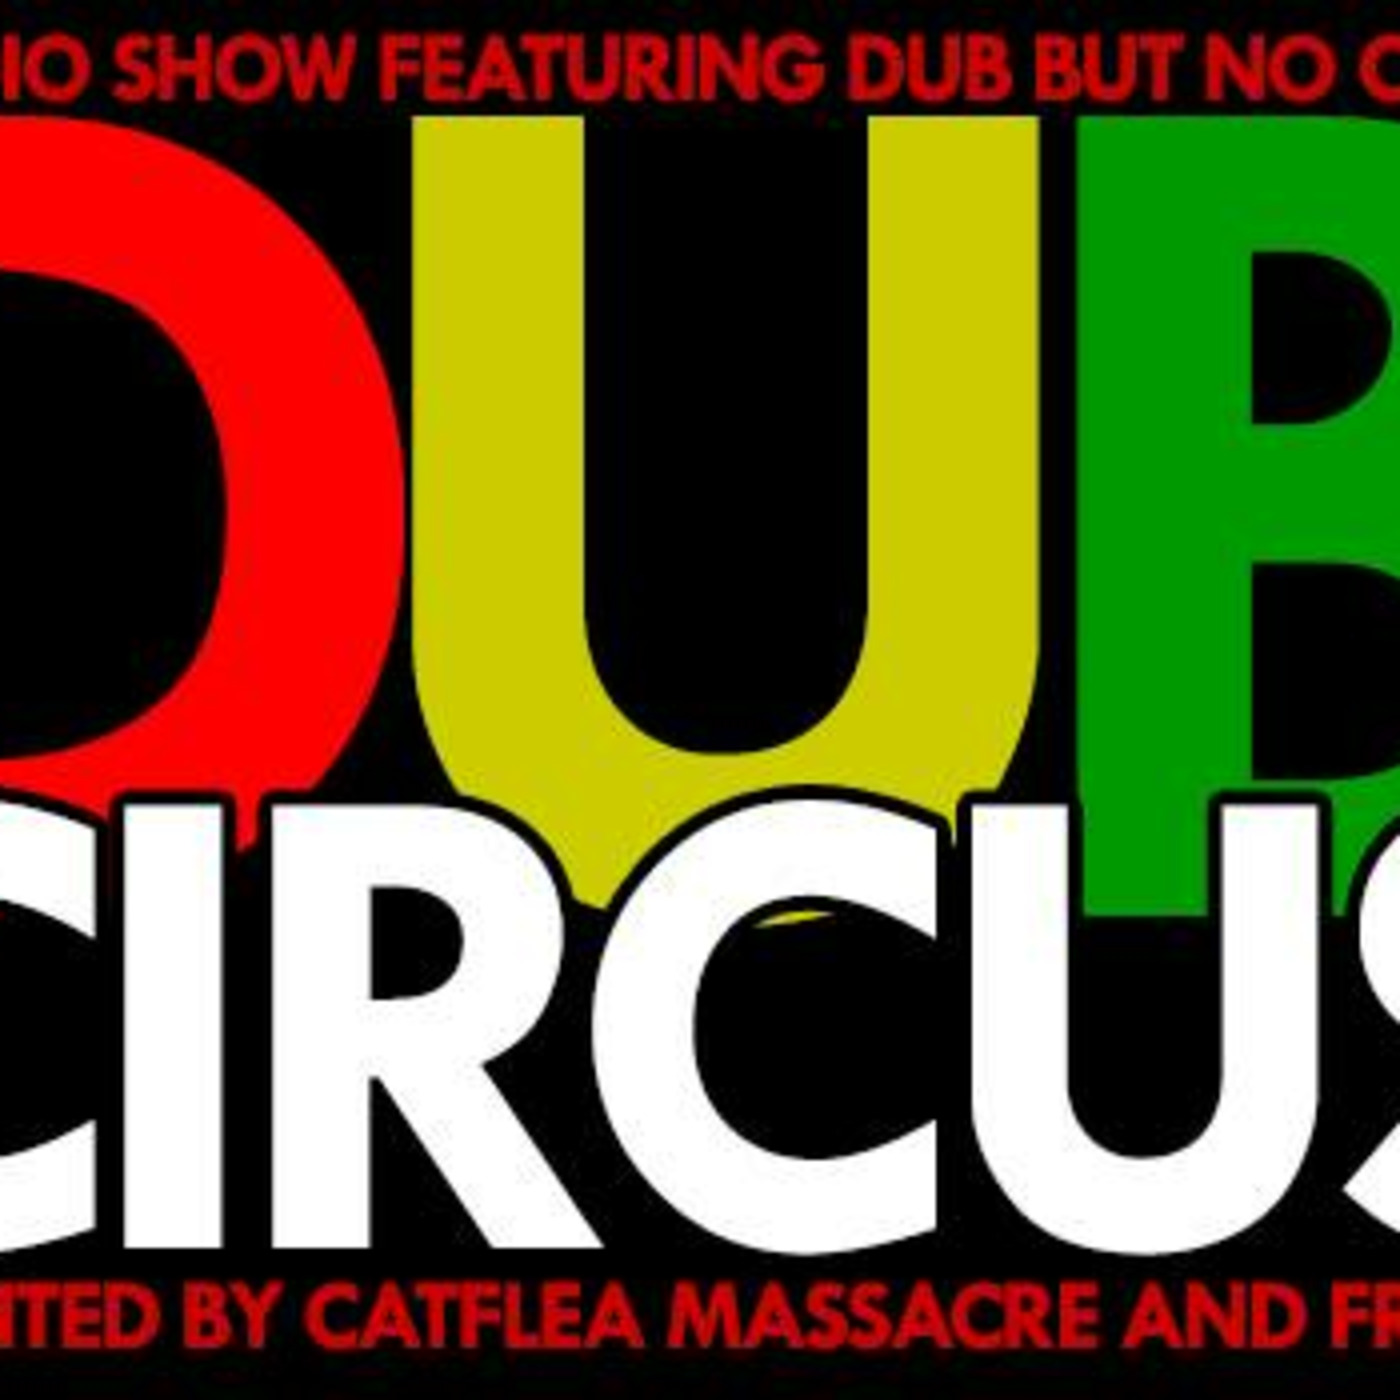 Episode 3244: Dub Circus Show 234 On bootboyradio.net